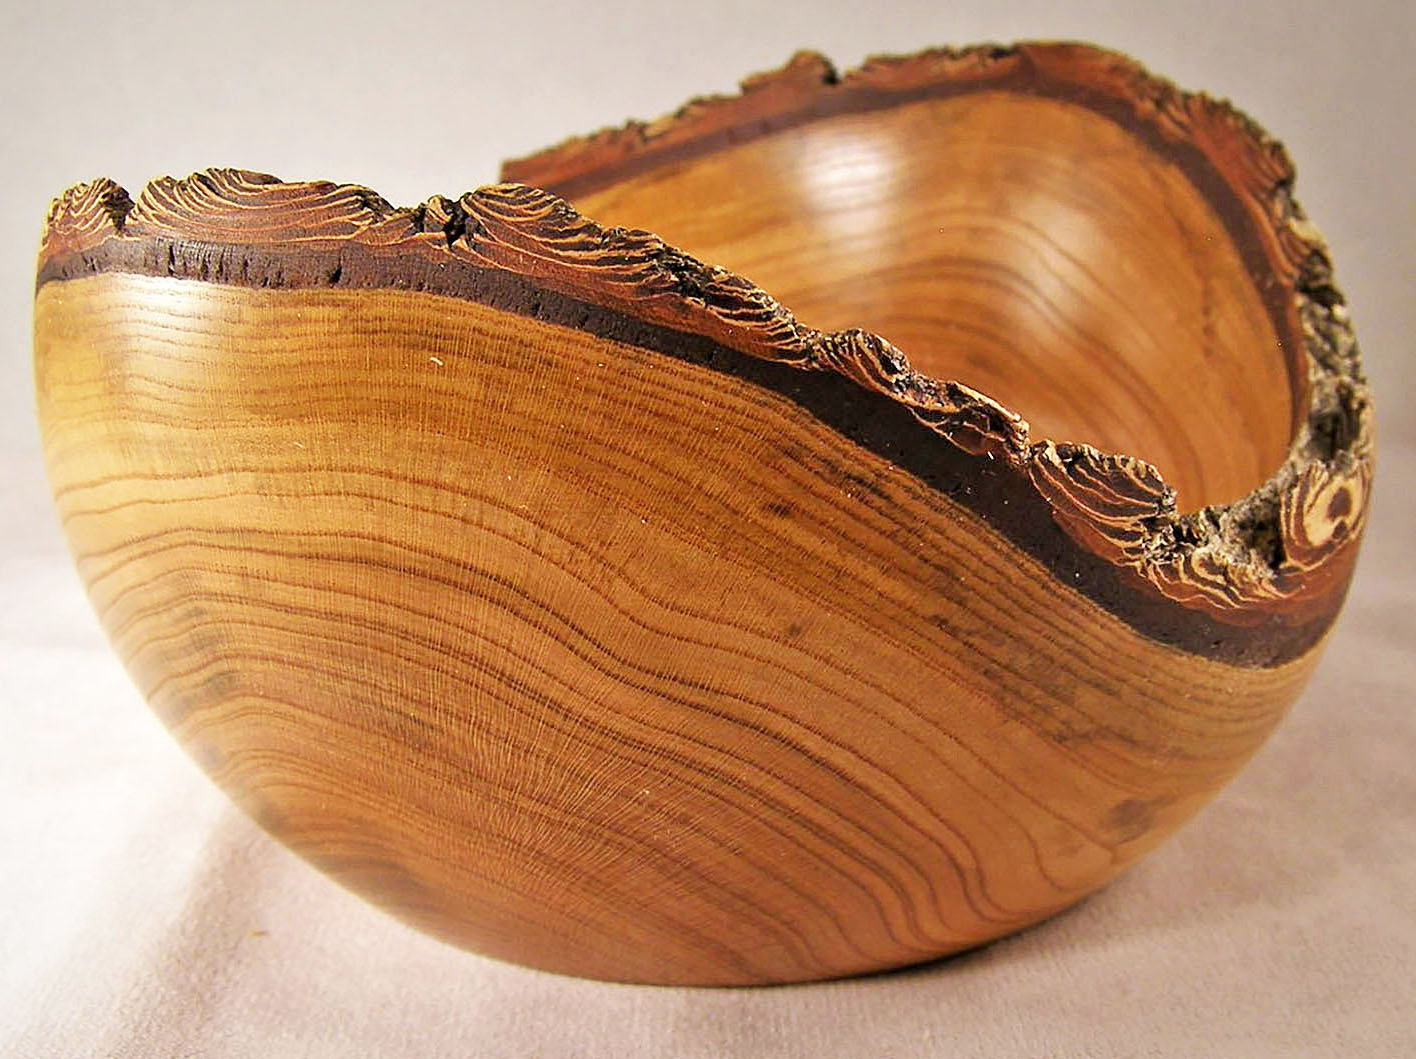 Courtesy image. Jeffrey Spahr turned this bowl from mahogany.